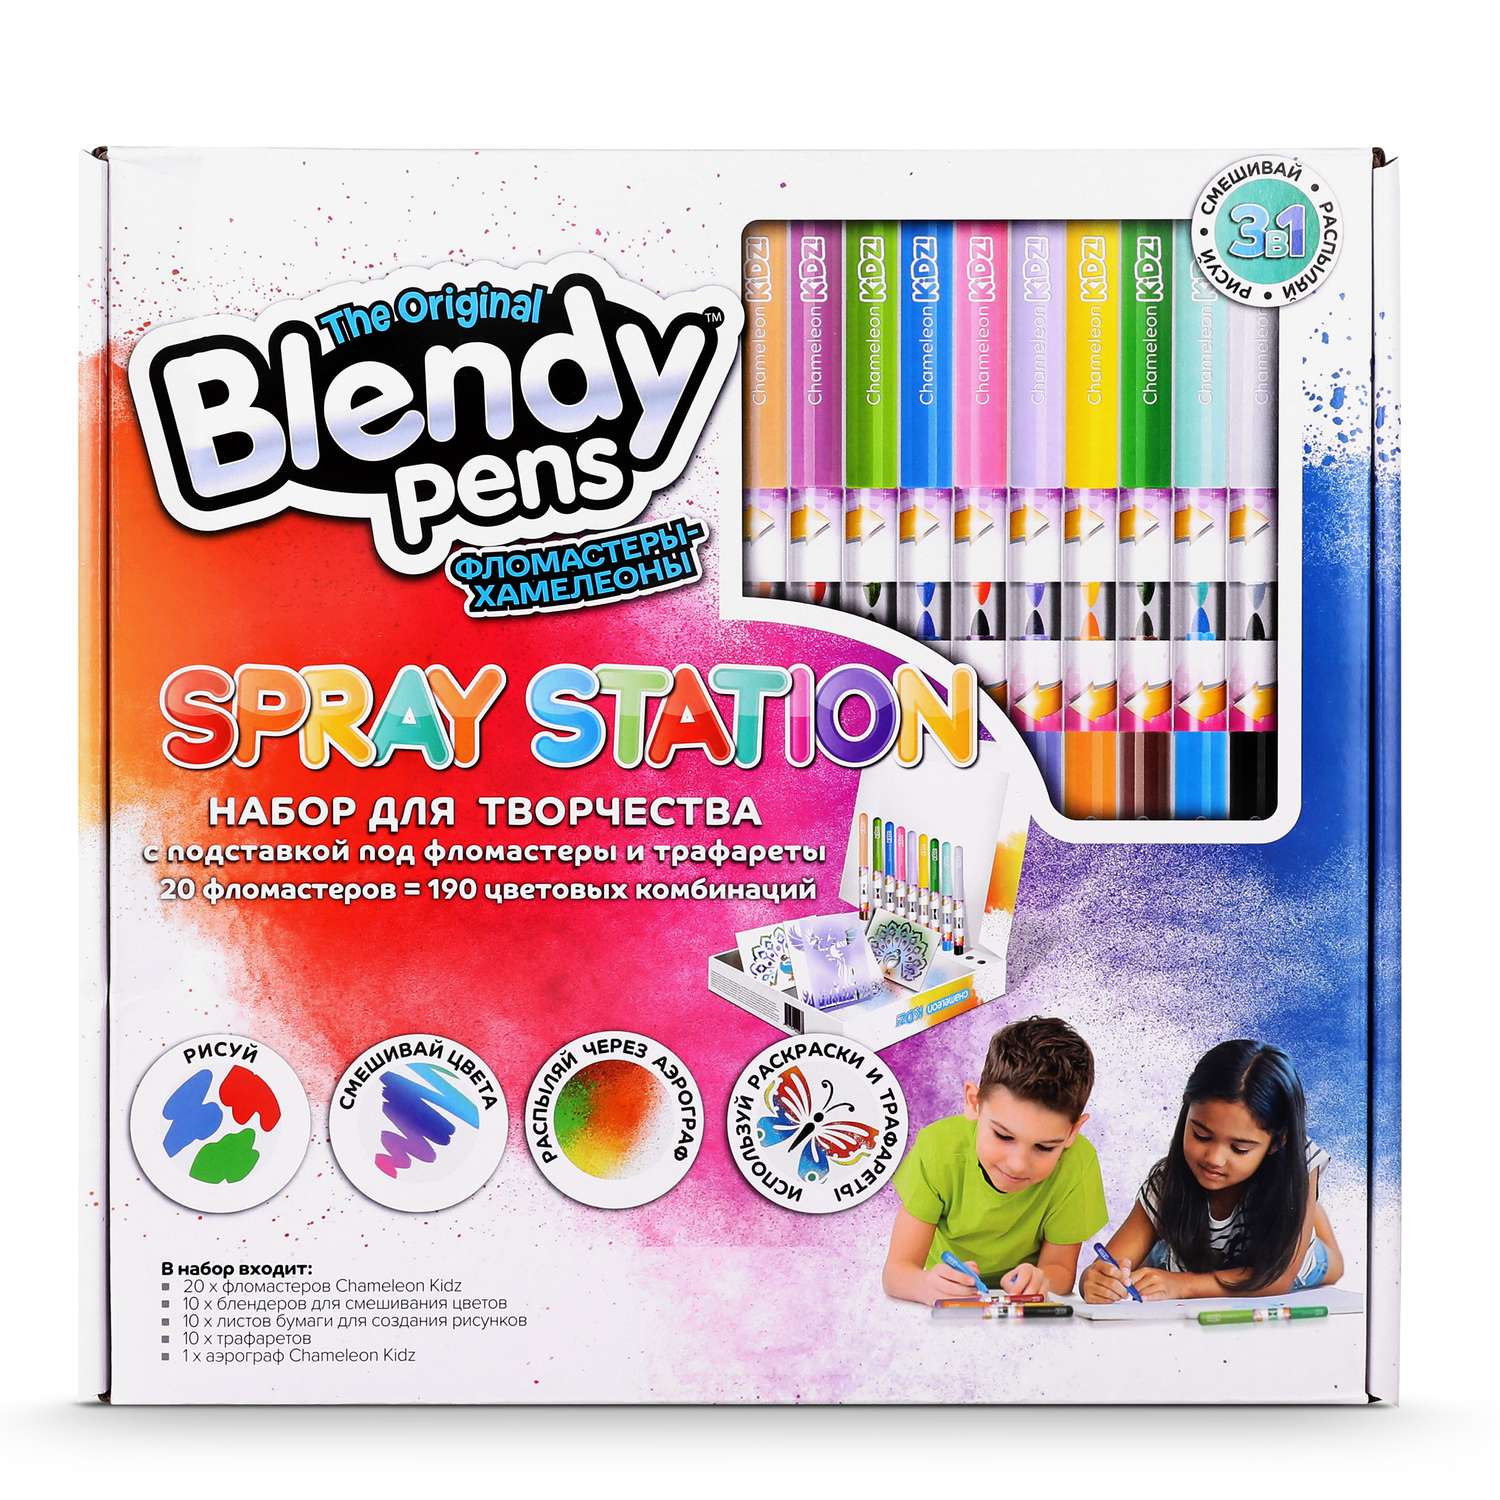 Набор для творчества Blendy pens Фломастеры хамелеоны 20 штук с аэрографом - фото 1